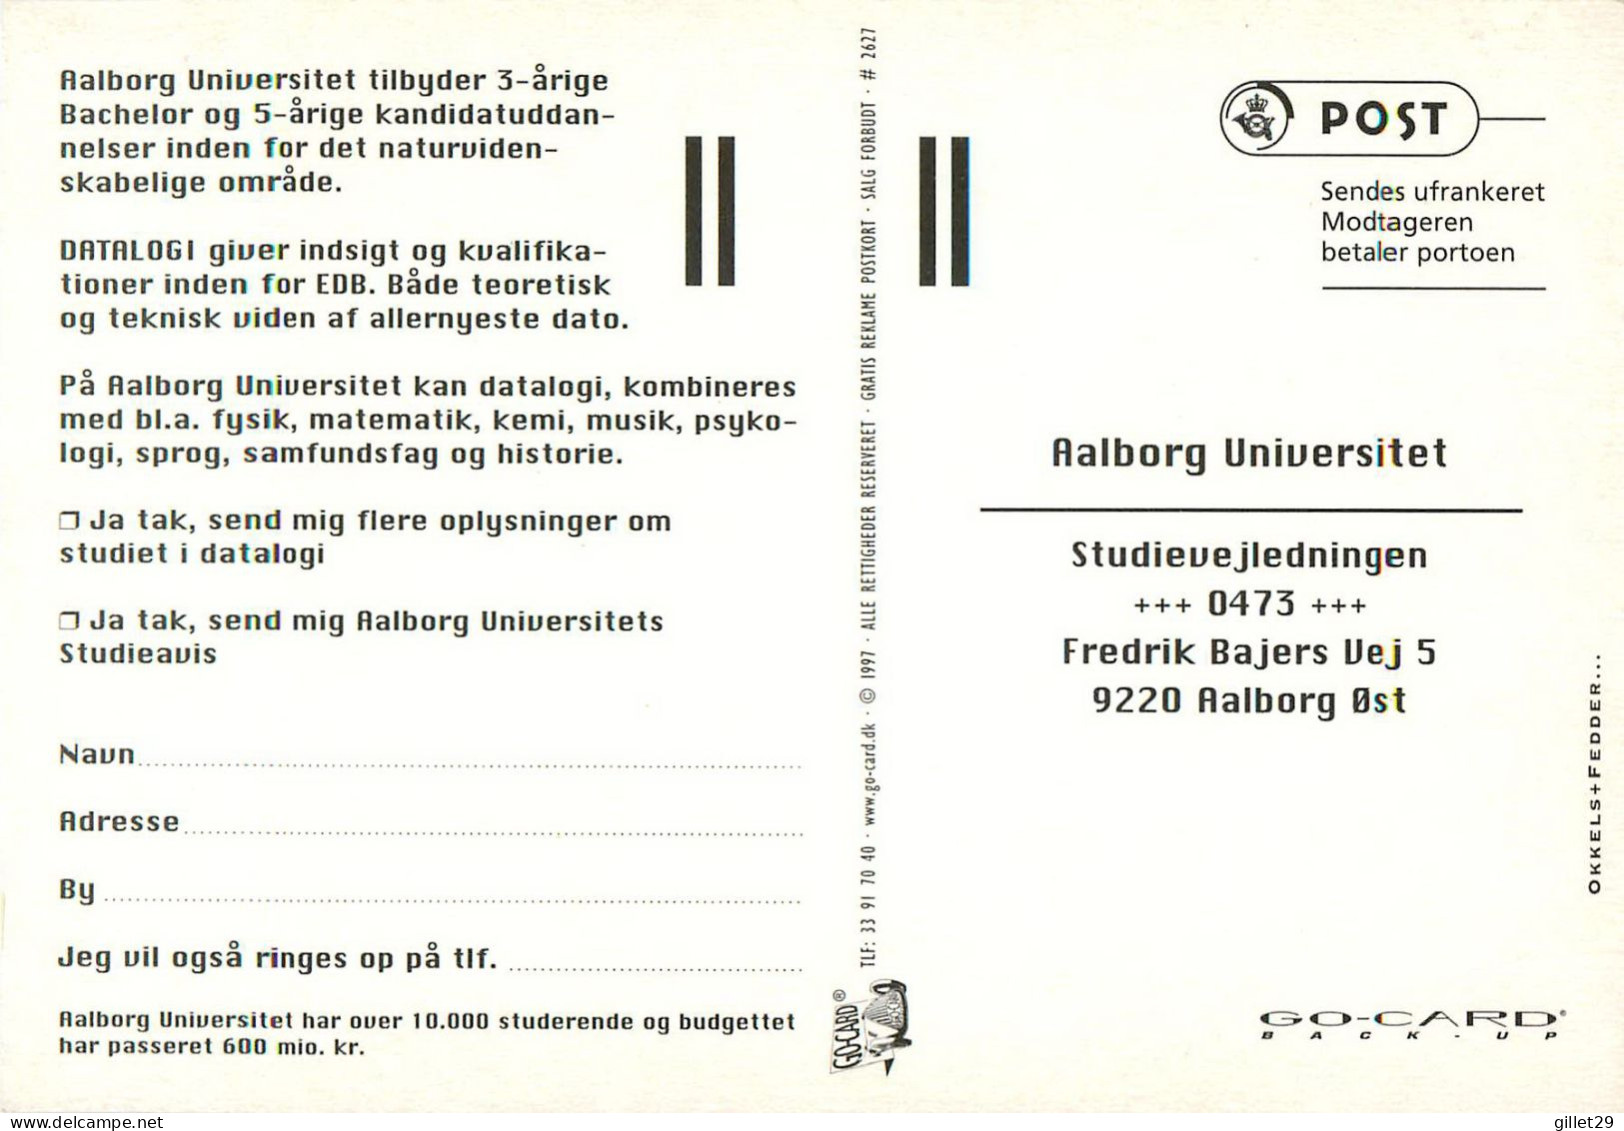 PUBLICITÉ - ADVERTISING - AALBORG UNIVERSITET - TA EN MEGABYTE AF FREMTIDEN - GO-CARD 1997 No 2627 - - Publicité